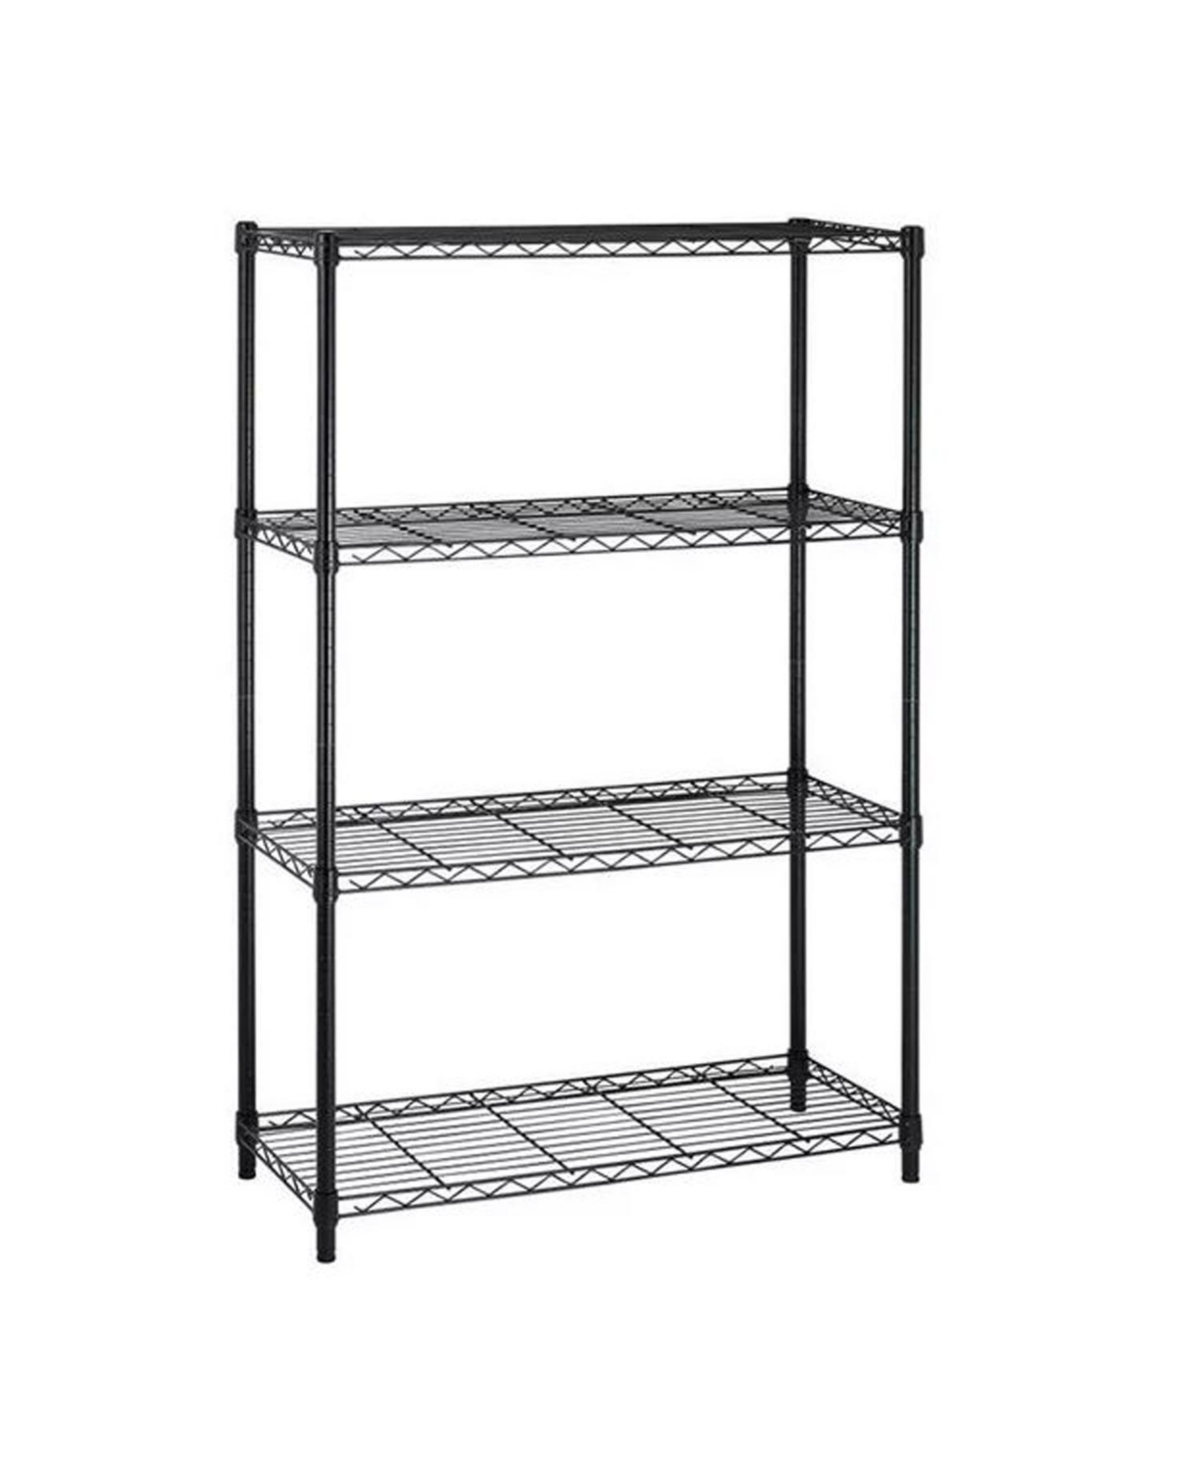 4 Tier Adjustable, Nsf Storage Shelving Unit, Steel Wire Shelves Garage Shelving Storage Racks - Black